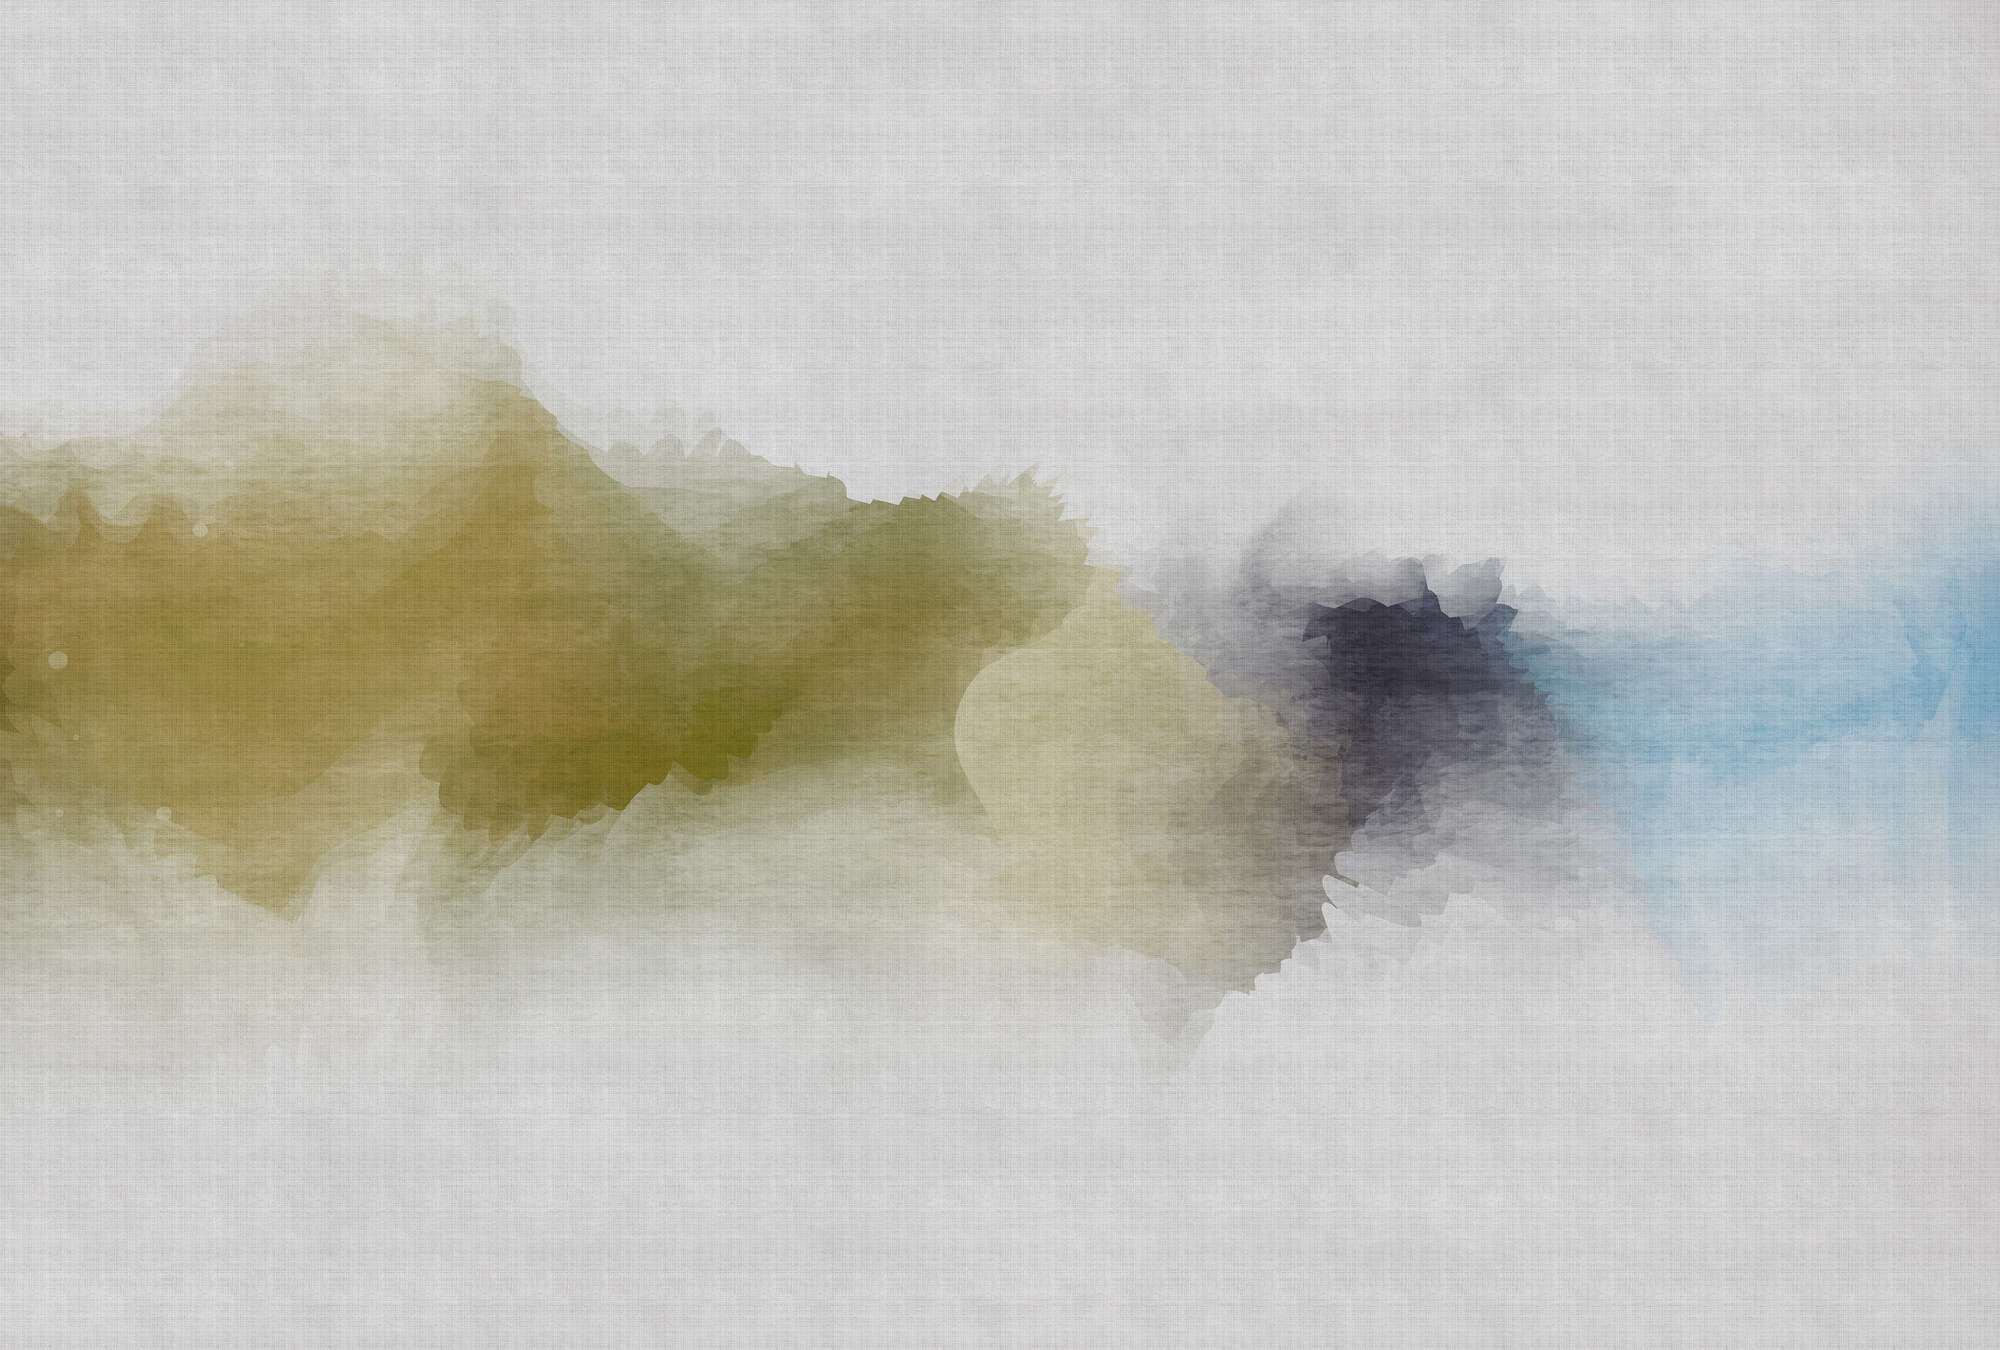             Daydream 3 - Fotomurali con motivo acquerello nuvoloso - struttura in lino naturale - Blu, Giallo | Pile liscio opaco
        